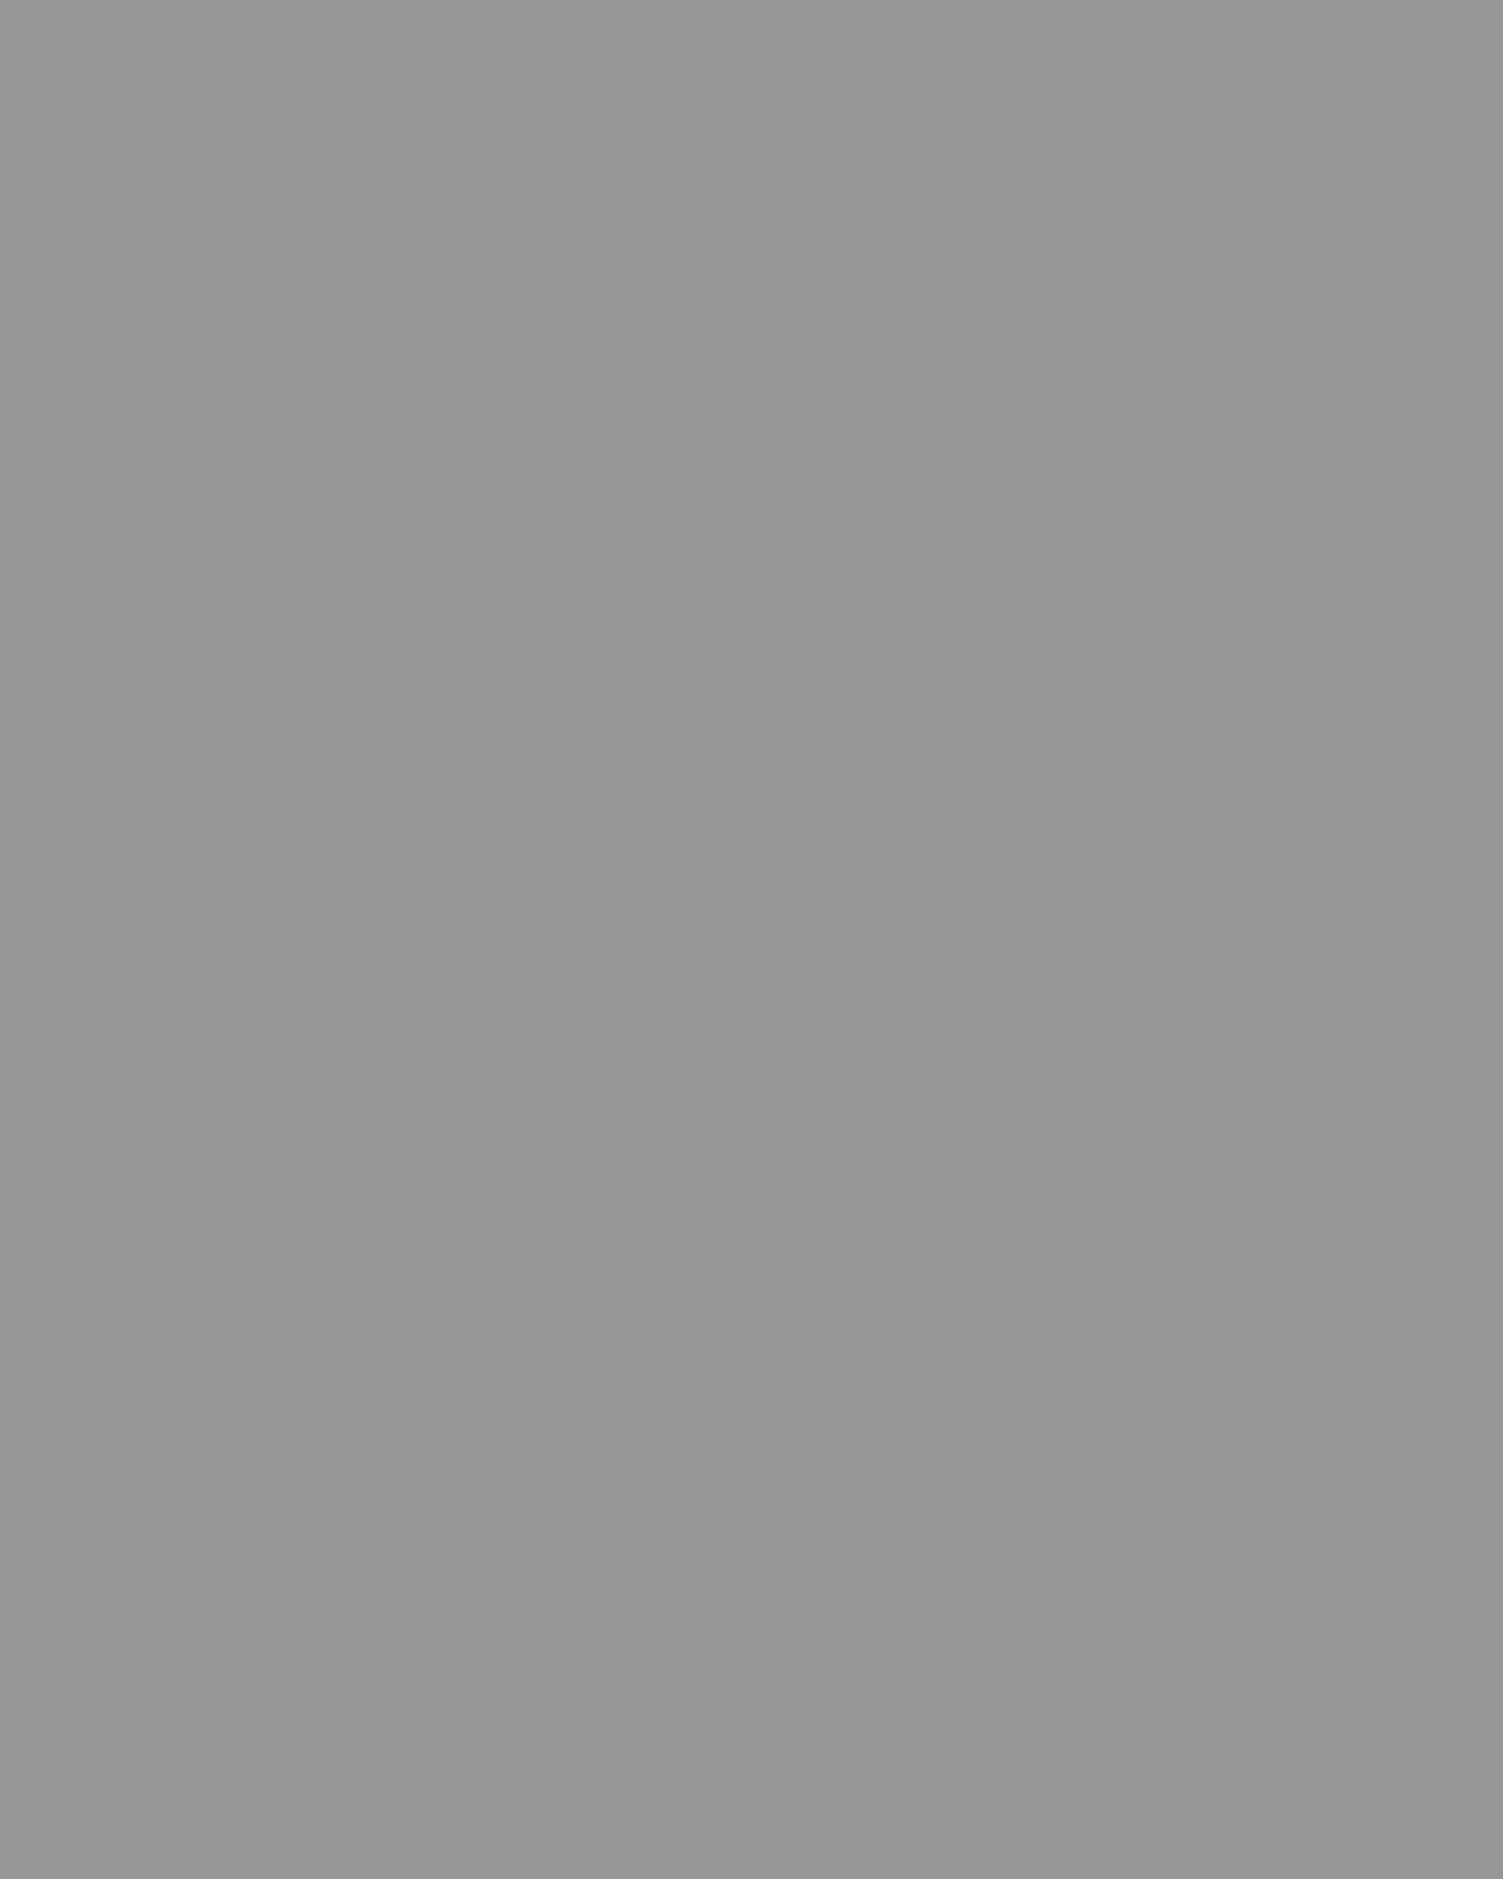 Памятник фельдмаршалу Михаилу Барклаю-де-Толли. Площадь перед Казанским собором, Санкт-Петербург. Фотография: Florstein / <a href="https://commons.wikimedia.org/w/index.php?curid=47638918" target="_blank" rel="noopener">commons.wikimedia</a> / <a href="https://creativecommons.org/licenses/by-sa/4.0" target="_blank" rel="noopener">CC BY-SA 4.0</a>